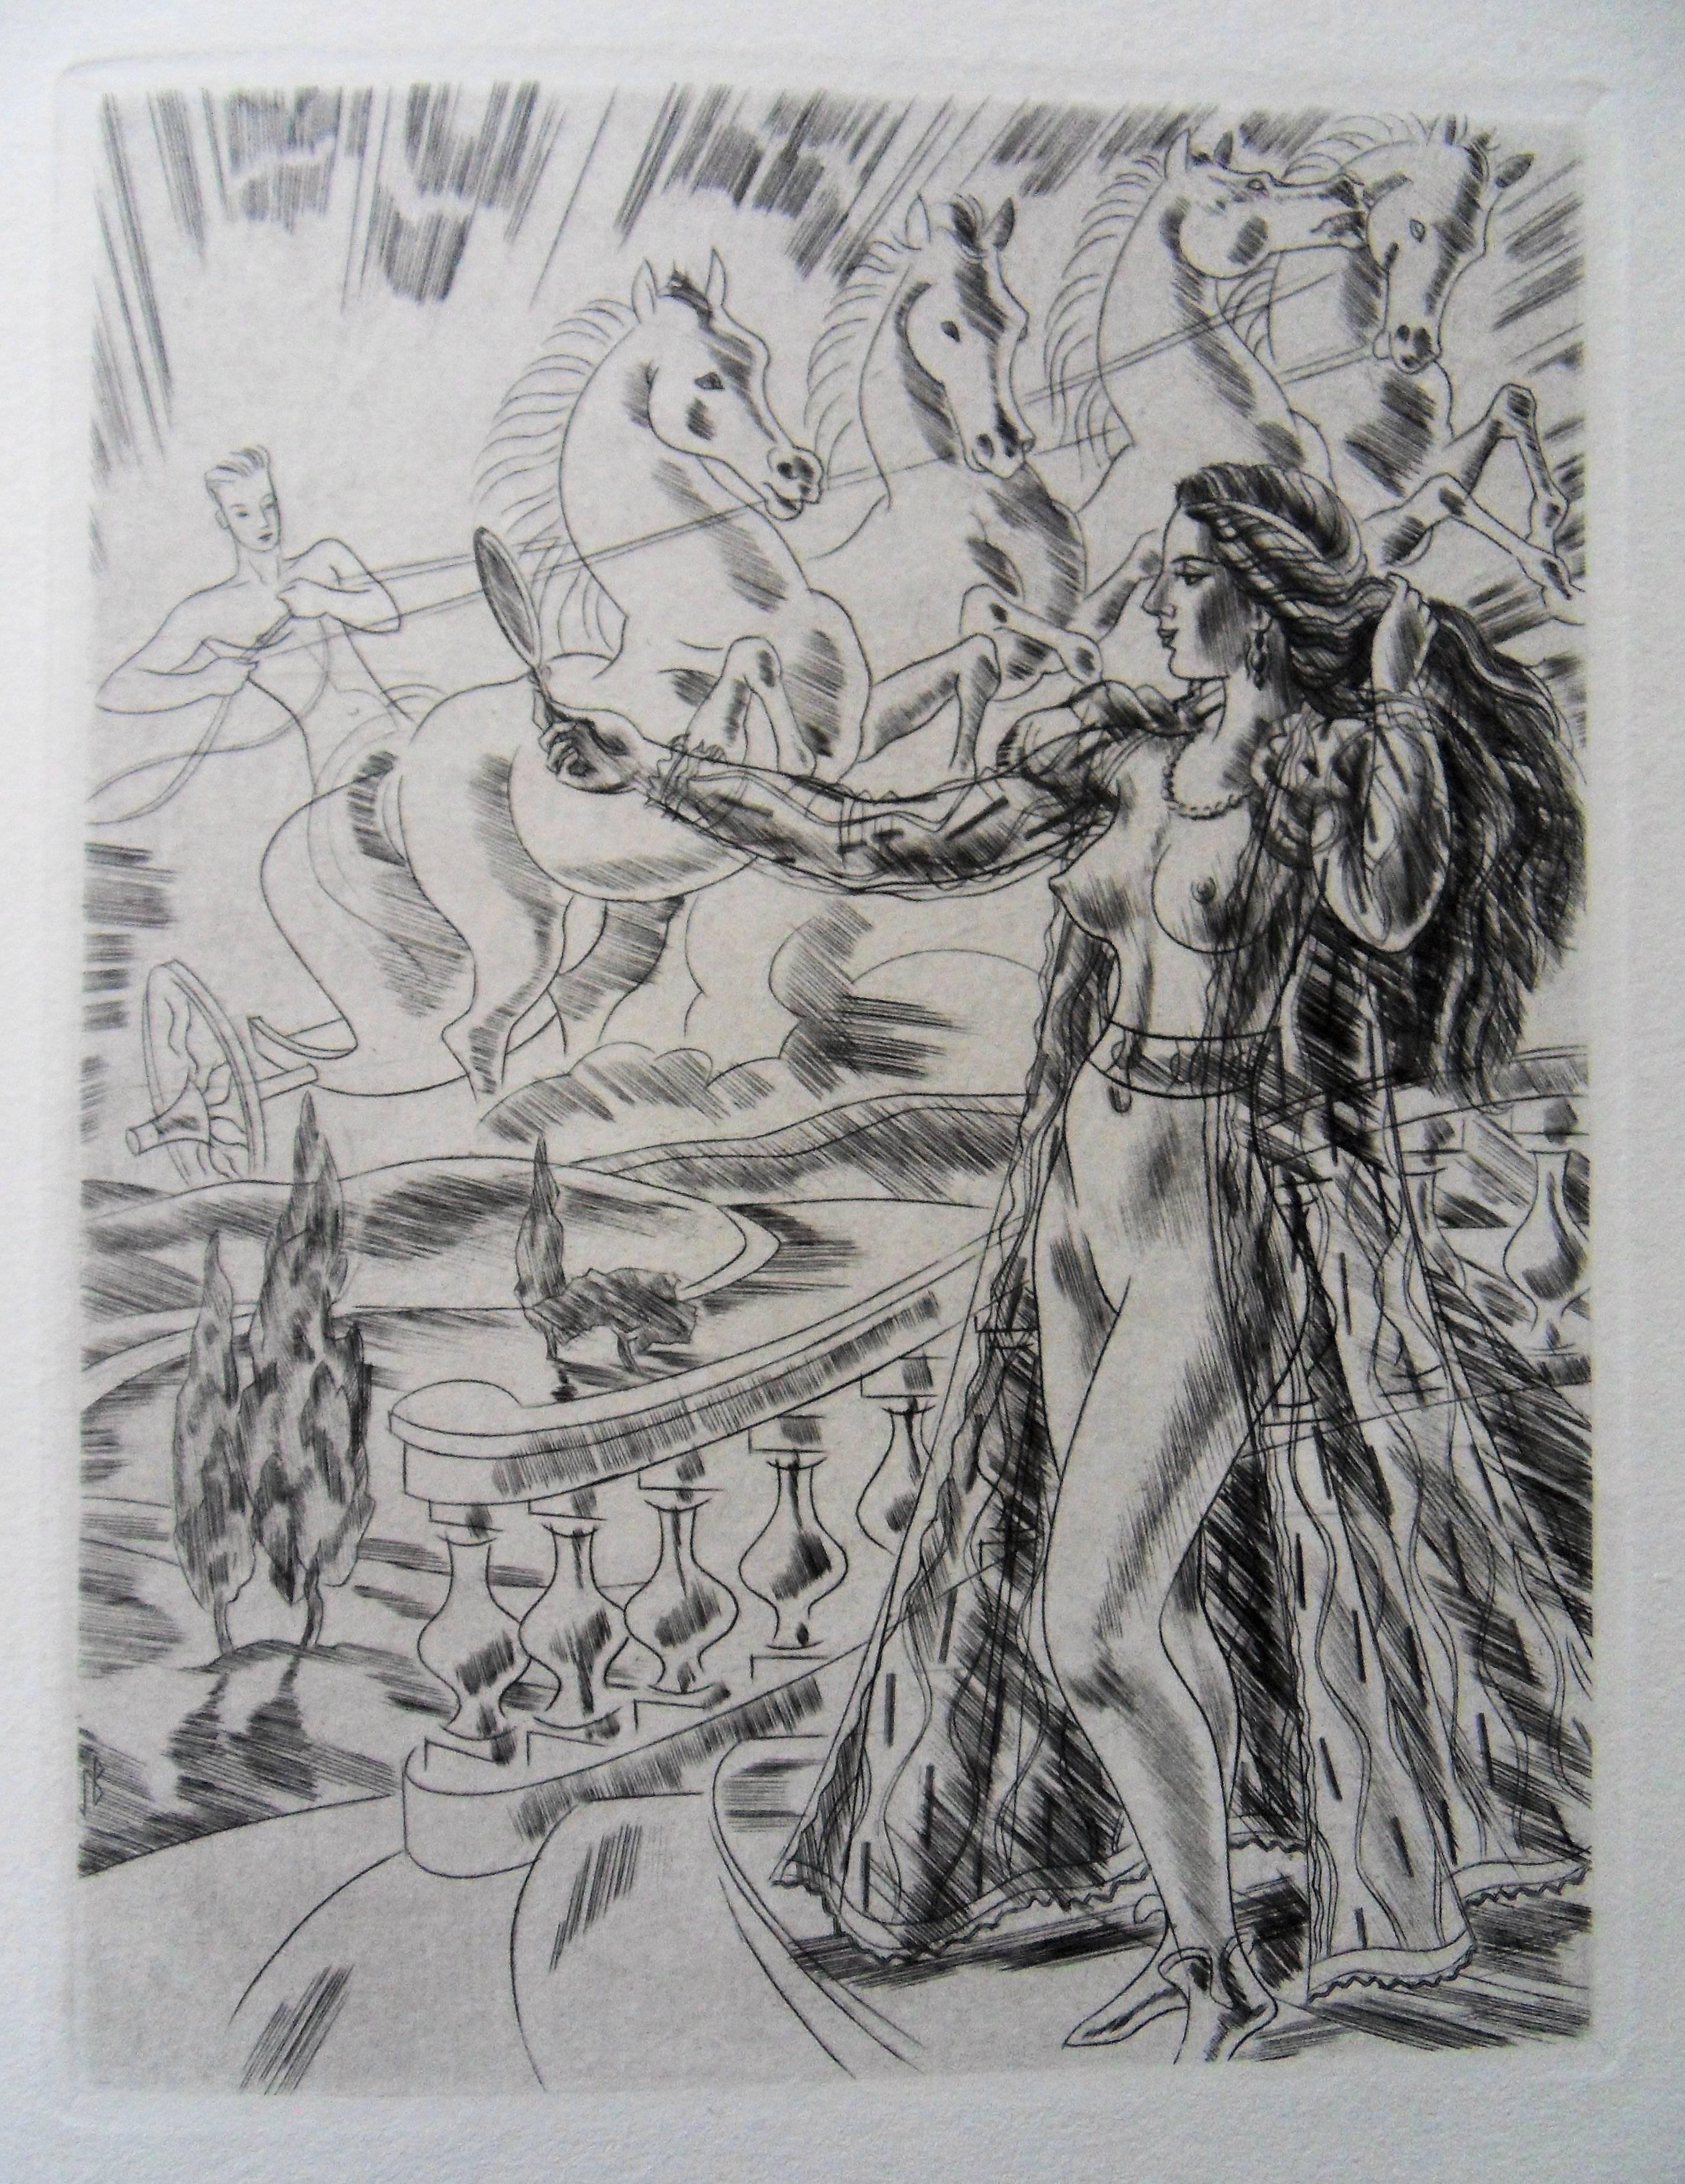 Jacques Boullaire Figurative Print - Mythological Beauty - Original etching, 1943